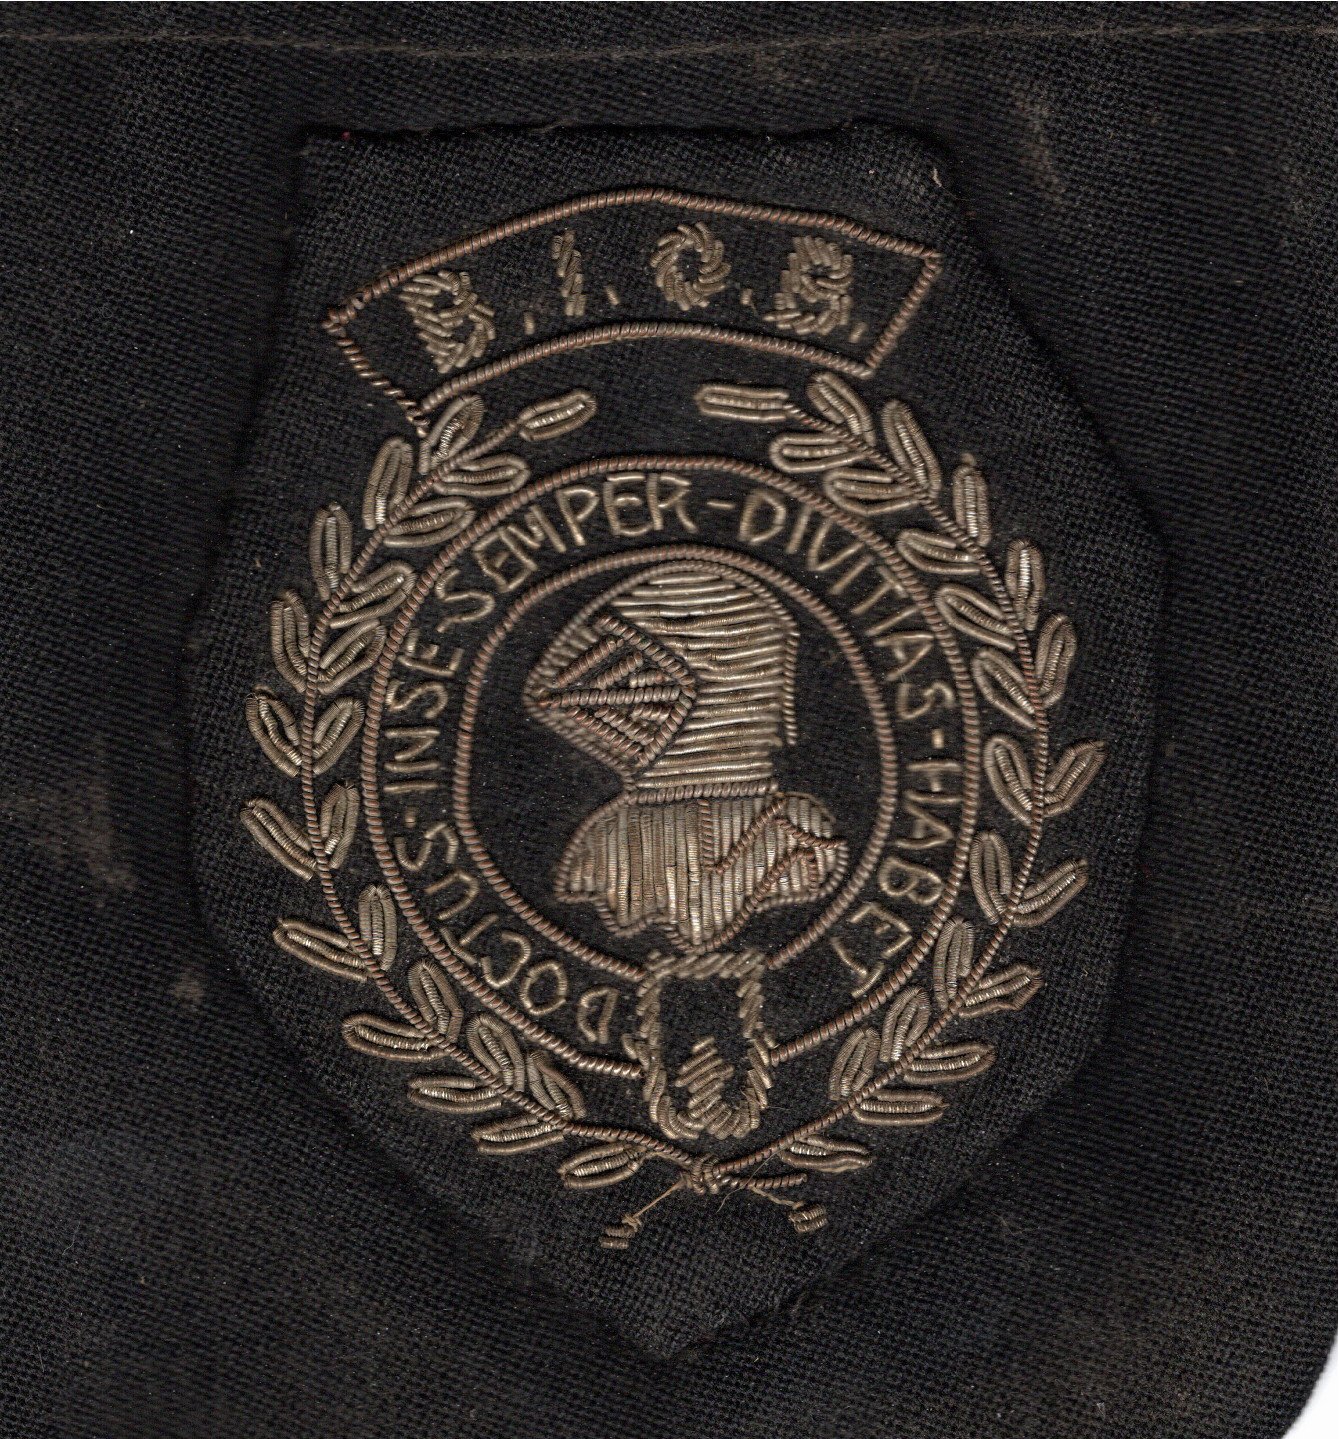 Photograph of Old Boys Black Blazer Badge